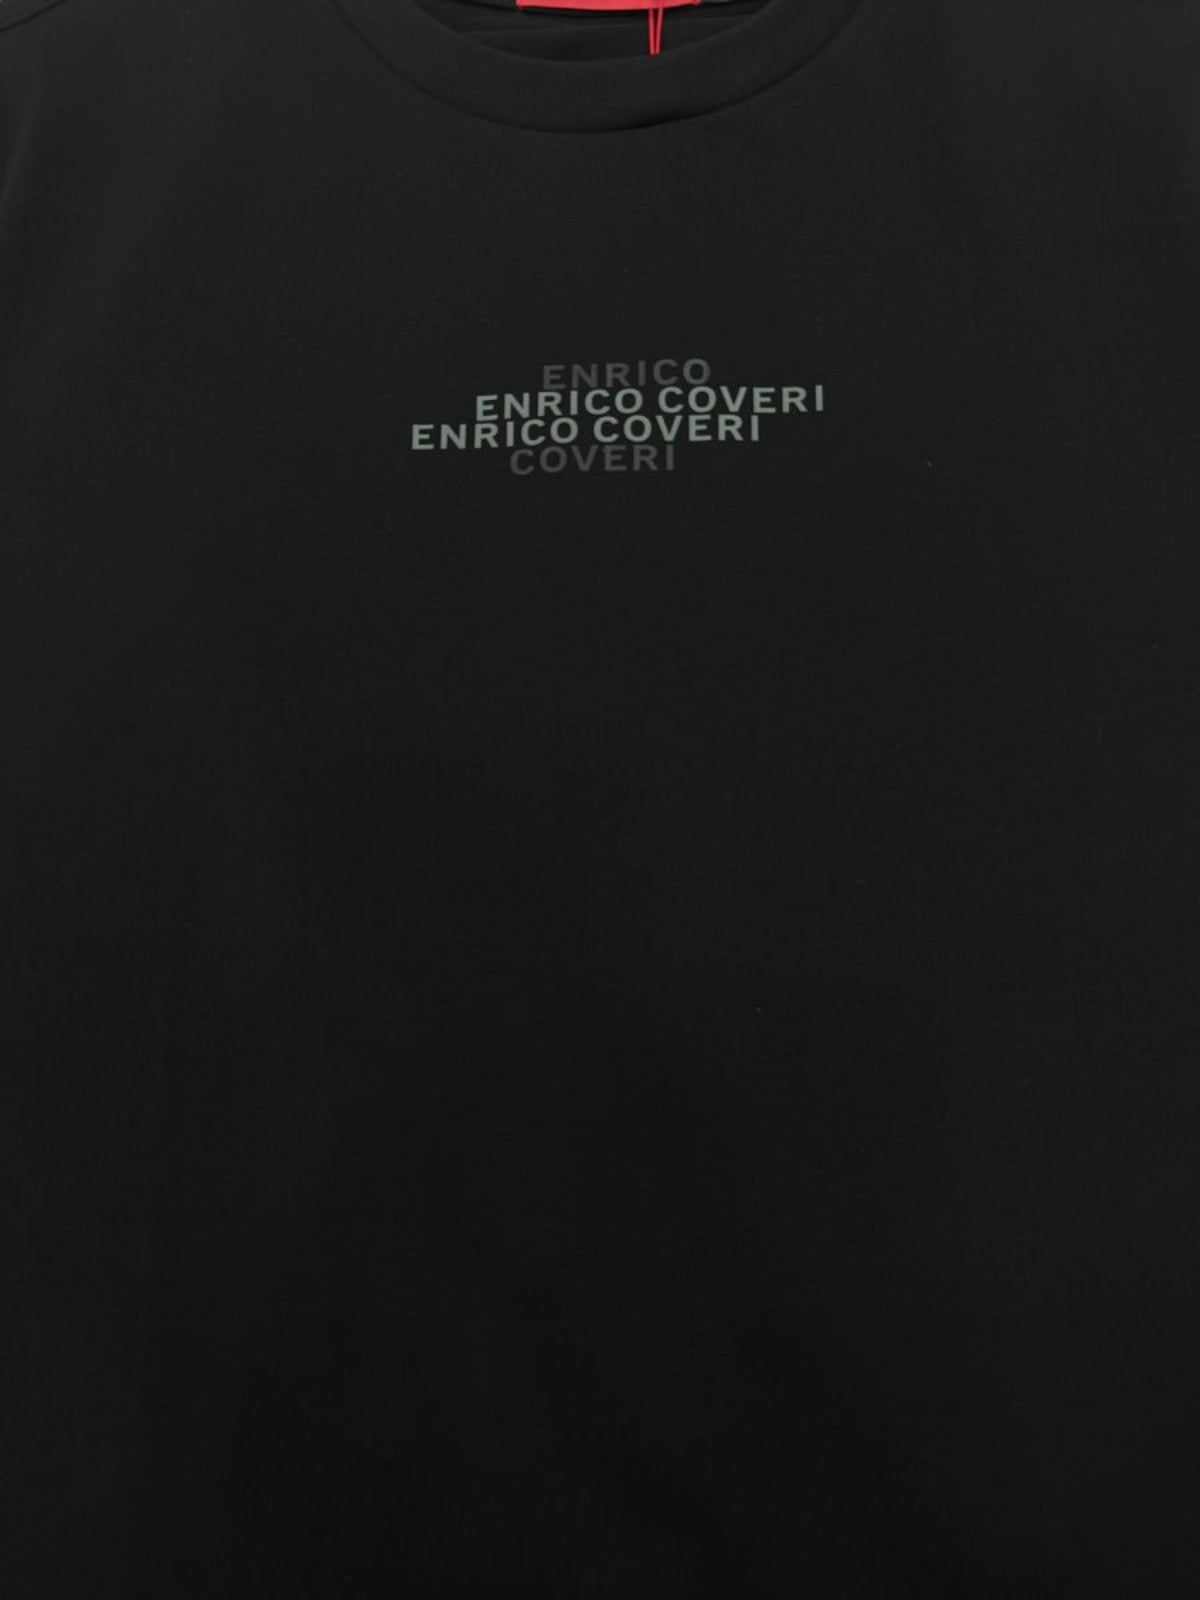 Enrico T-Shirt Center Mini Logos Black